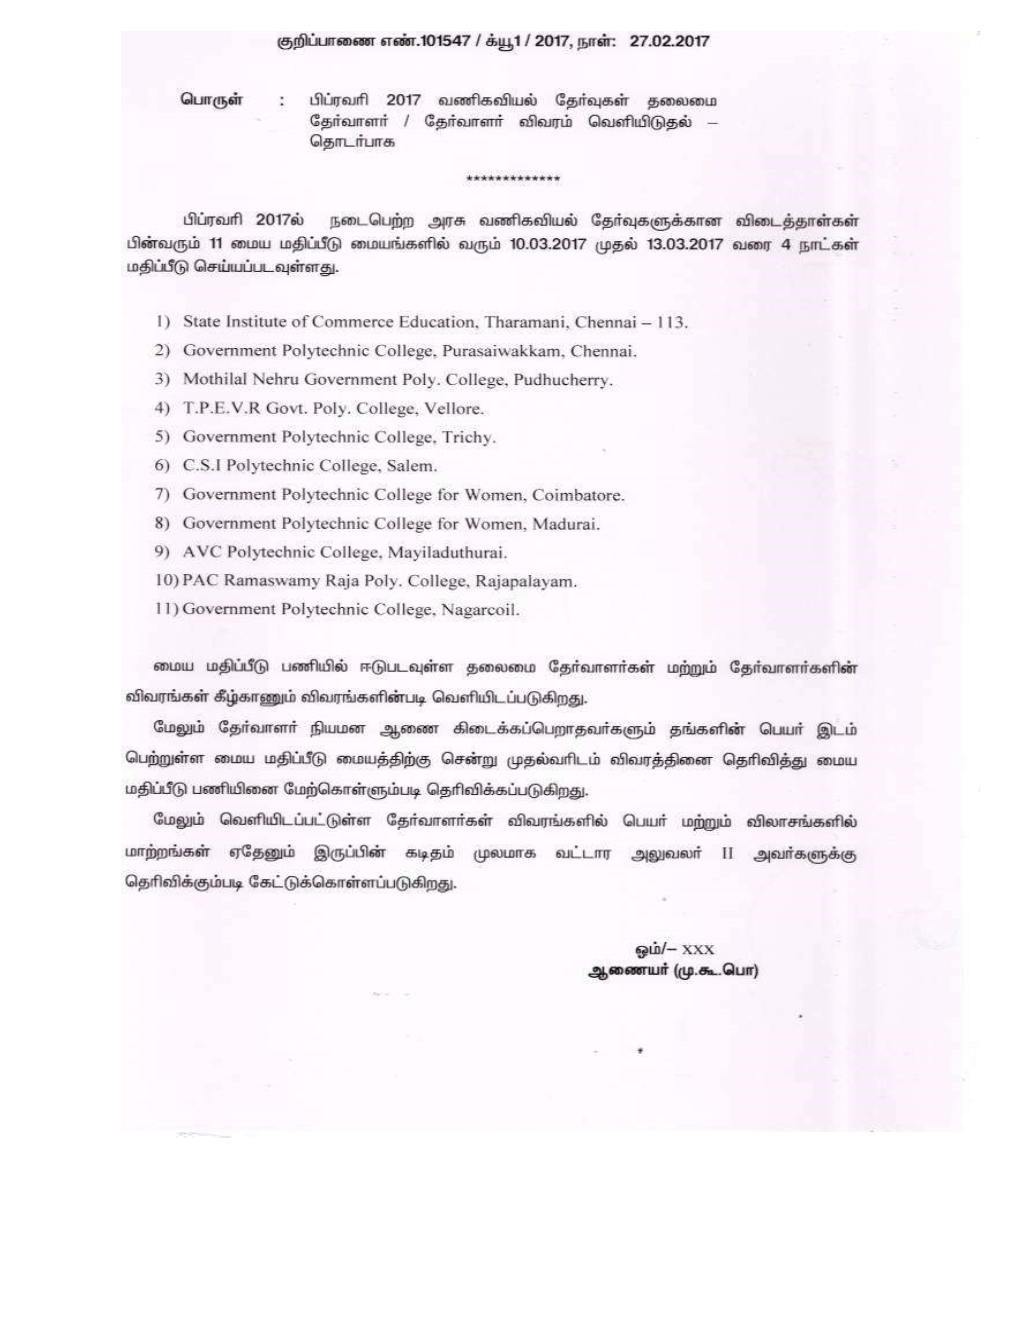 Center No 1: State Institute of Commerce Education,Tharamani,Chennai - 600 113